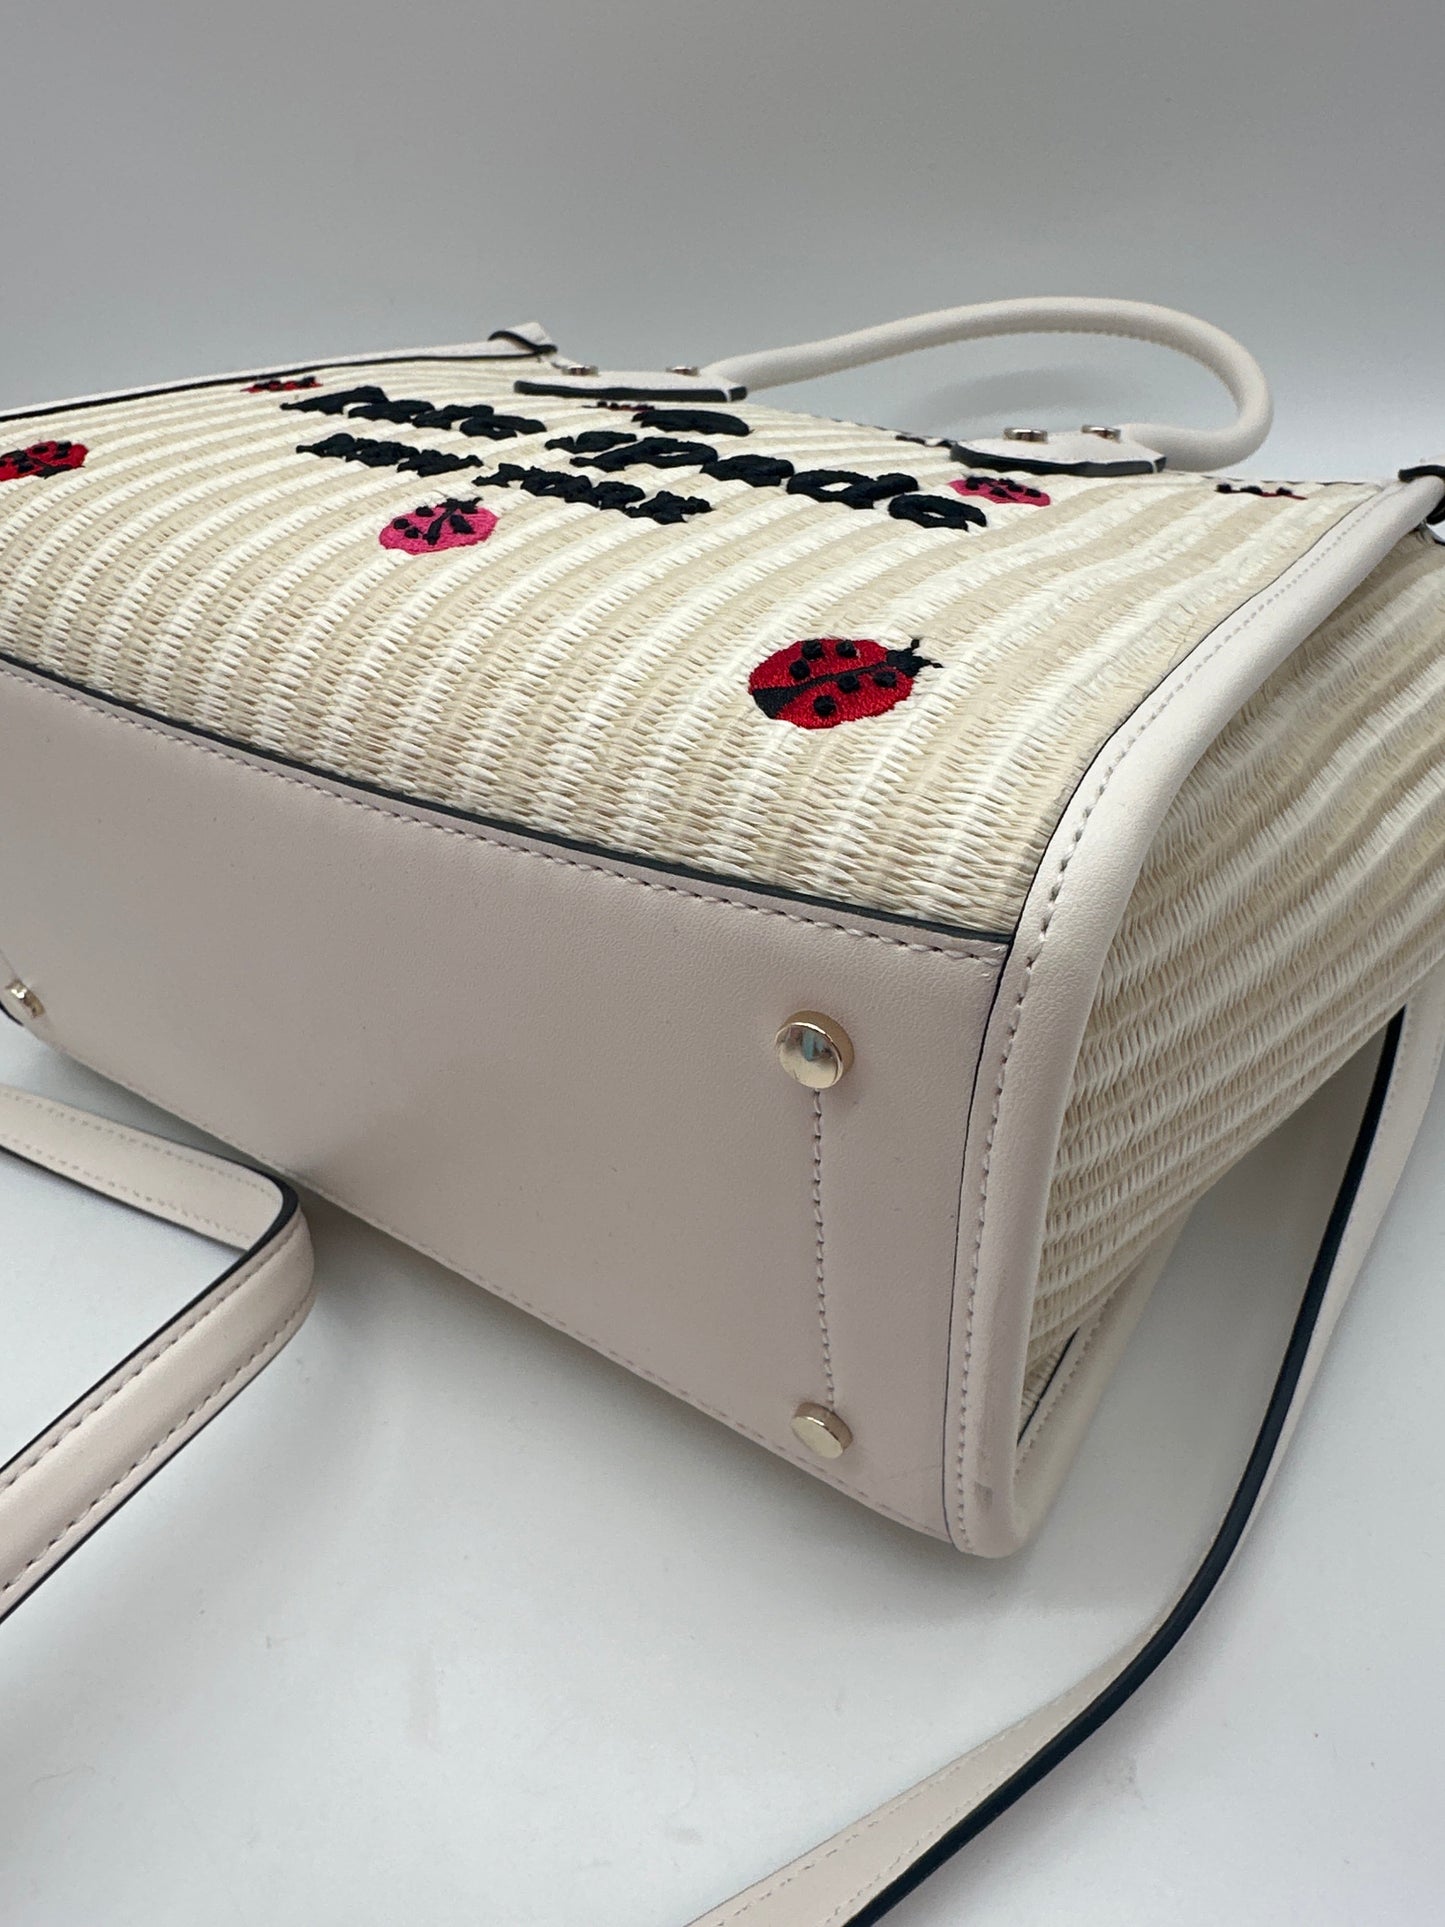 Handbag Designer Kate Spade, Size Medium